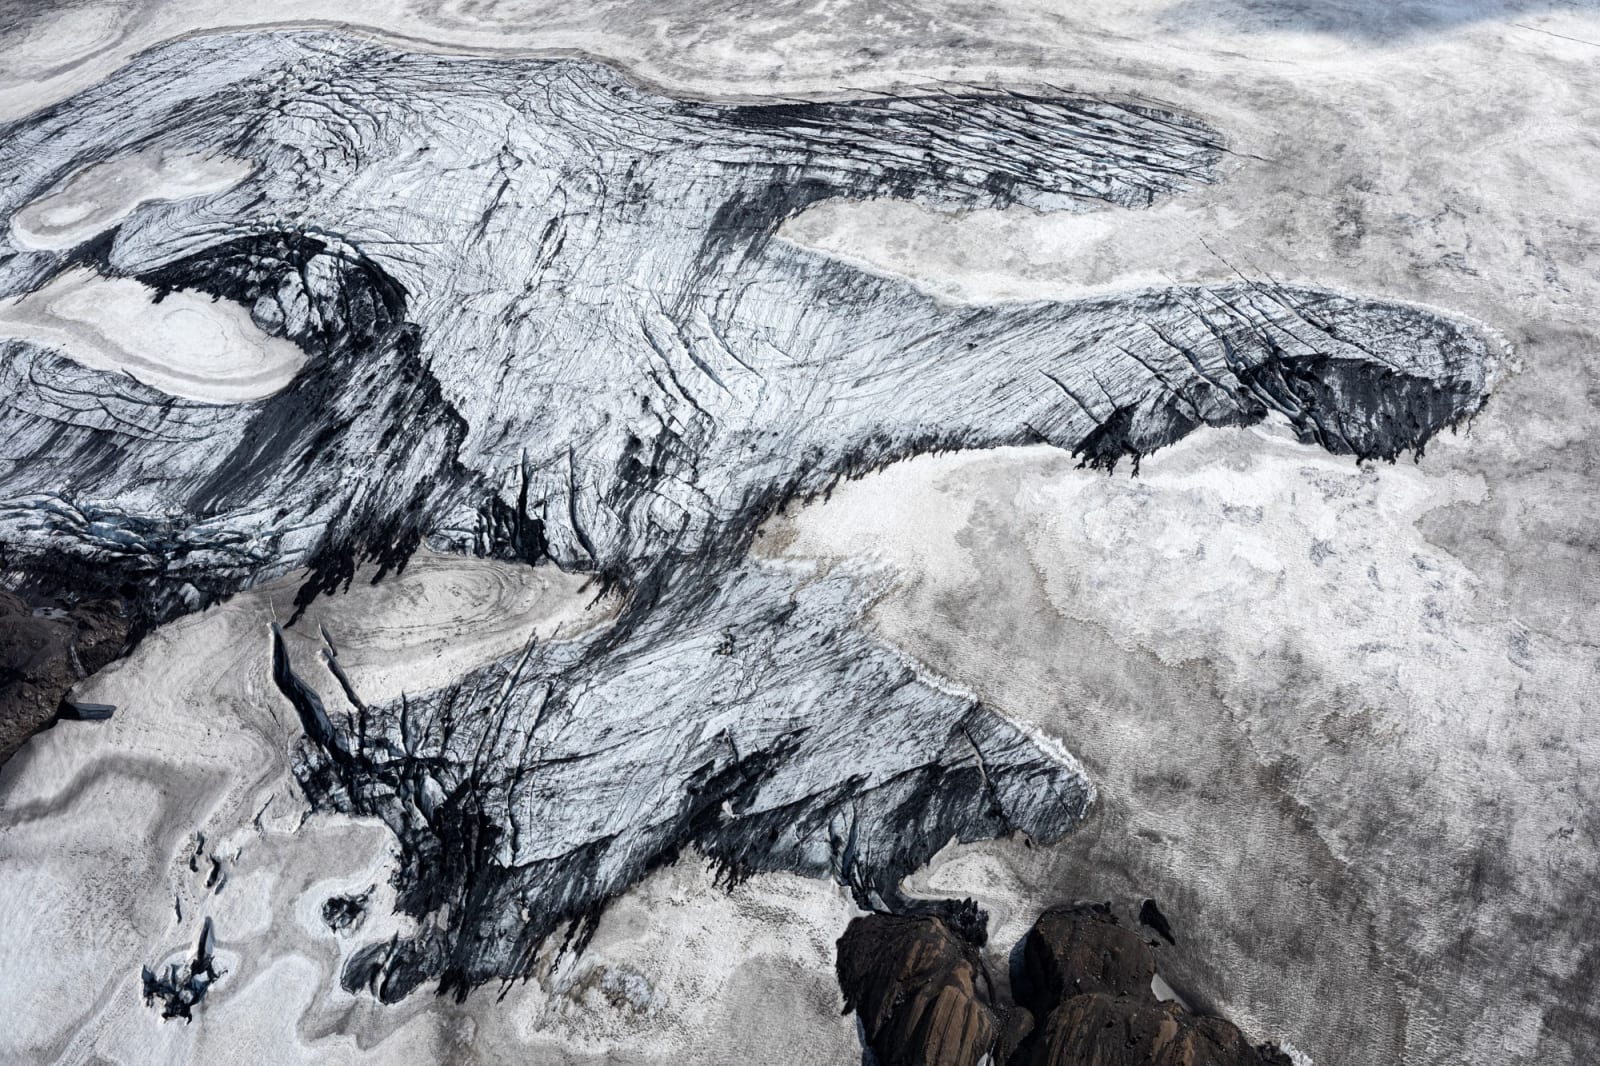 Matjaž Krivic, Islandski ledenik 08 / Iceland Glacier 08, 2019